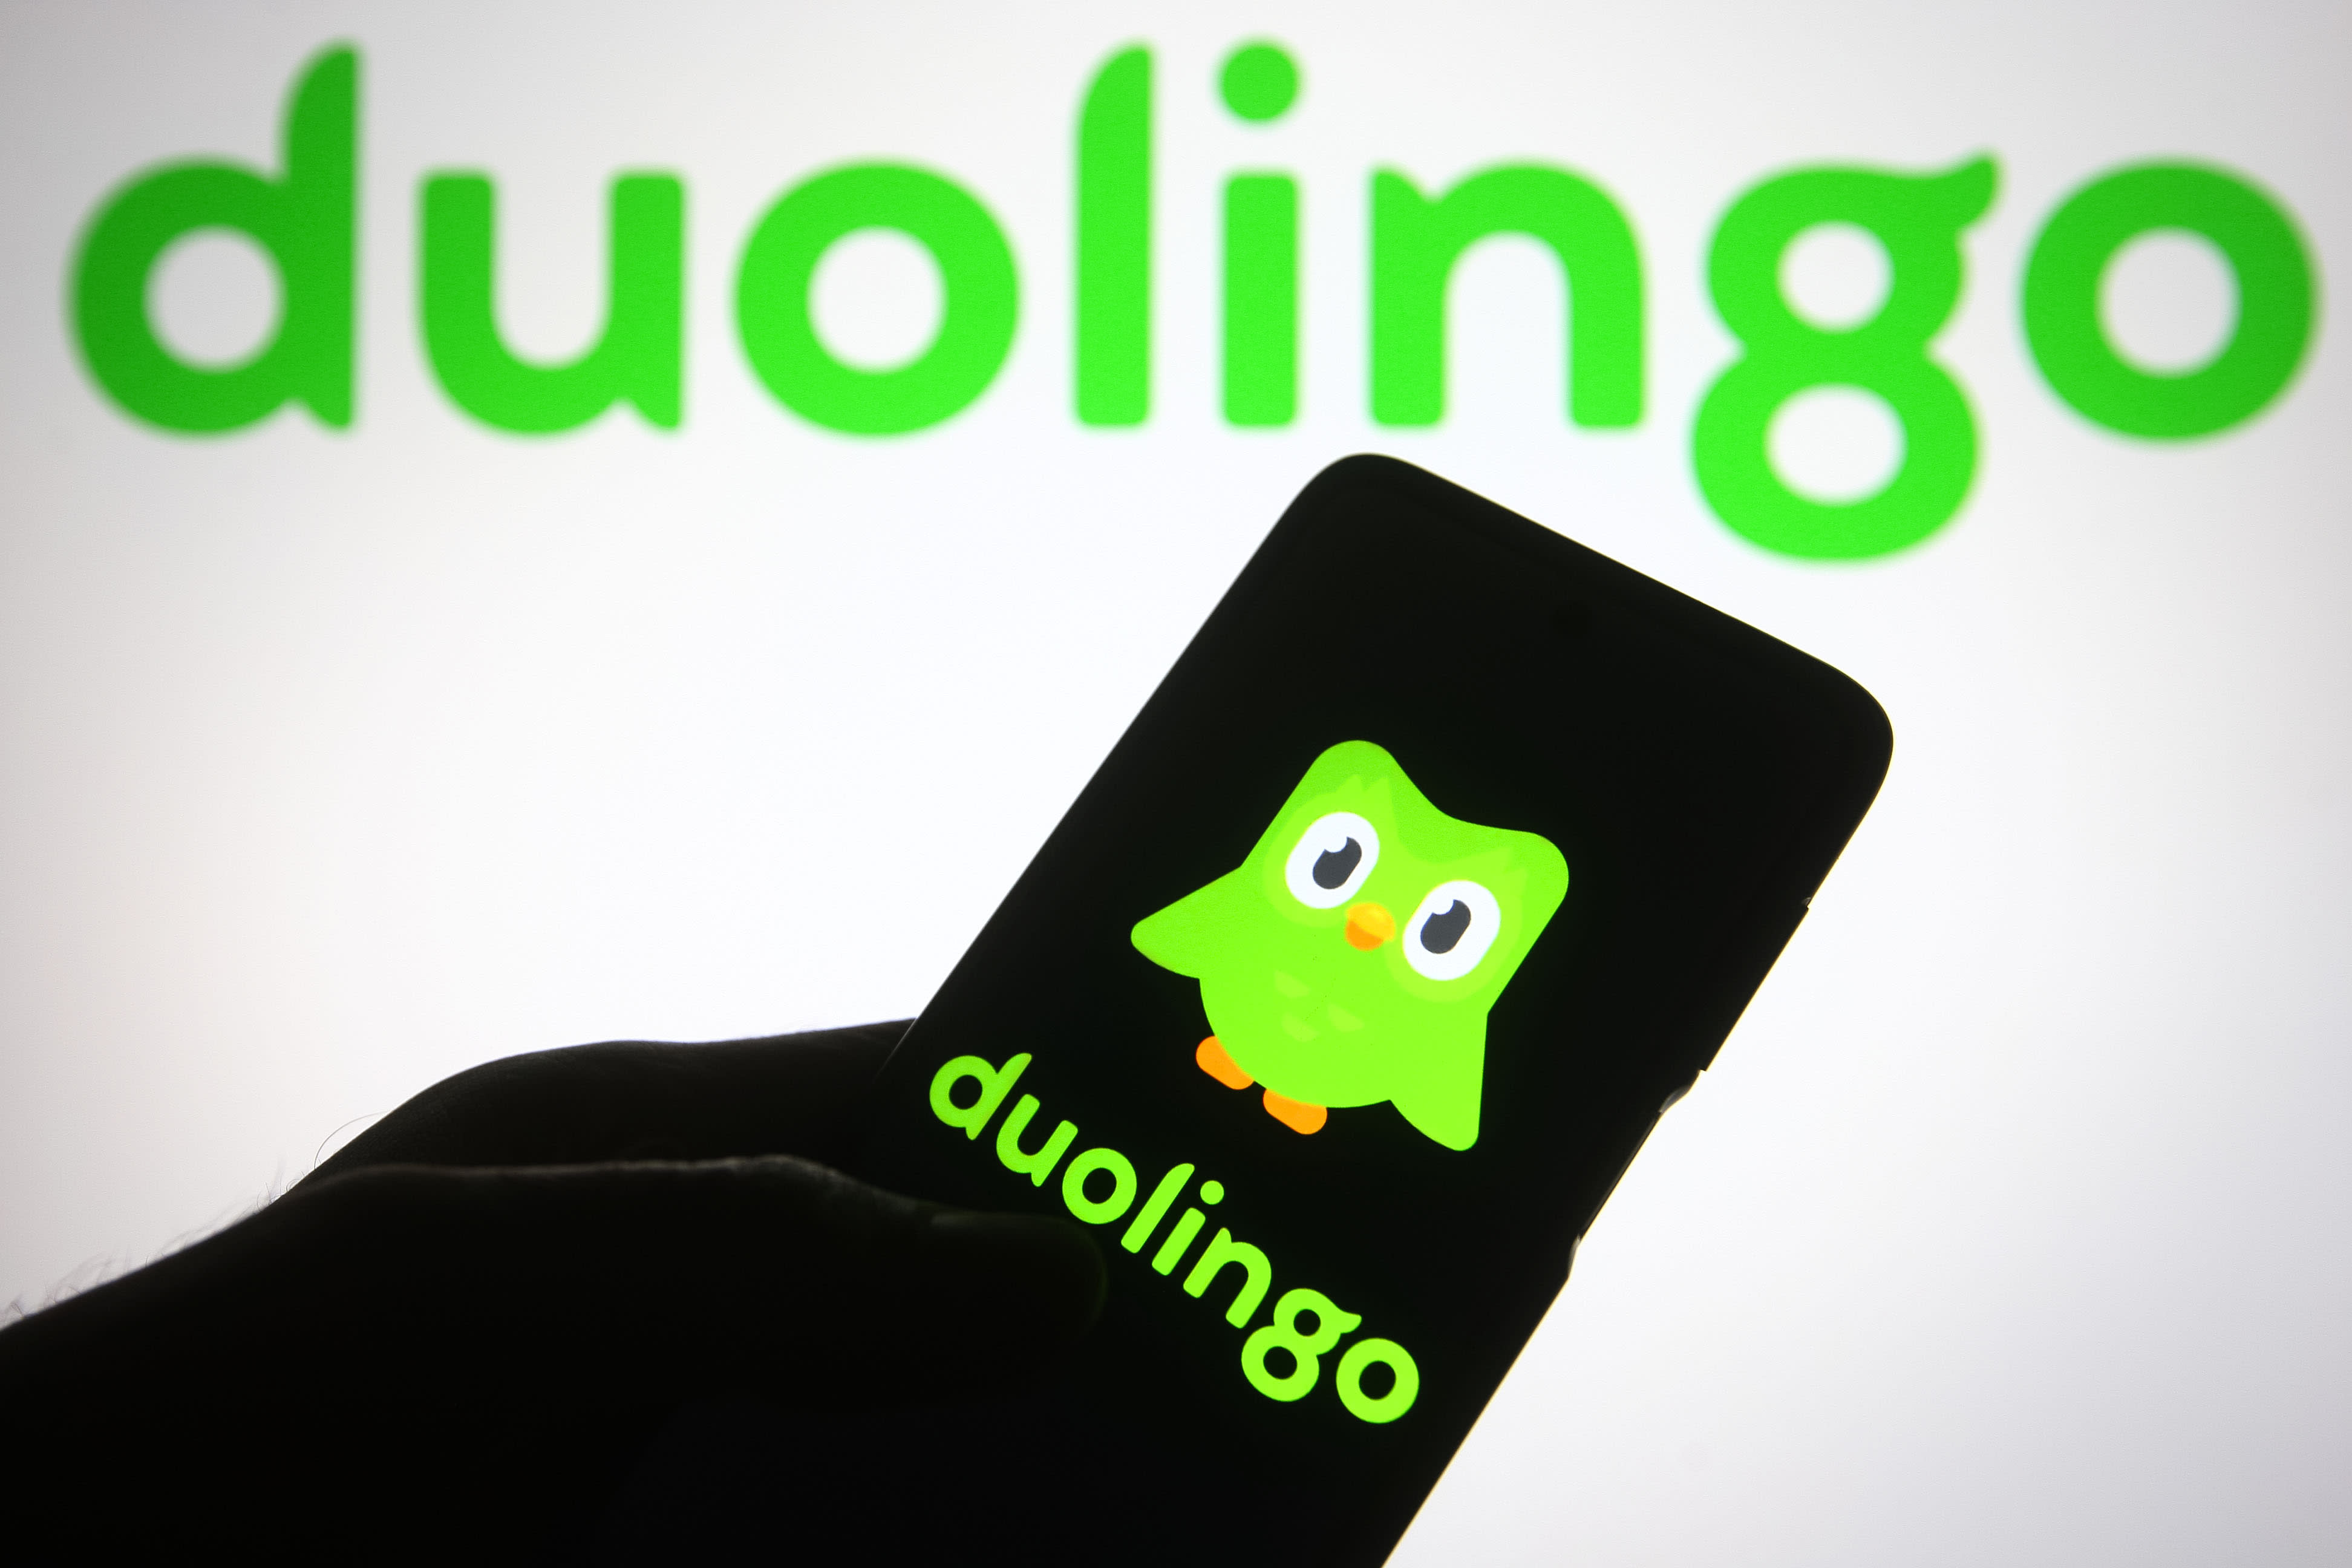 Language-learning company Duolingo closes up 36% in Nasdaq debut, valuing company at nearly $5 billion